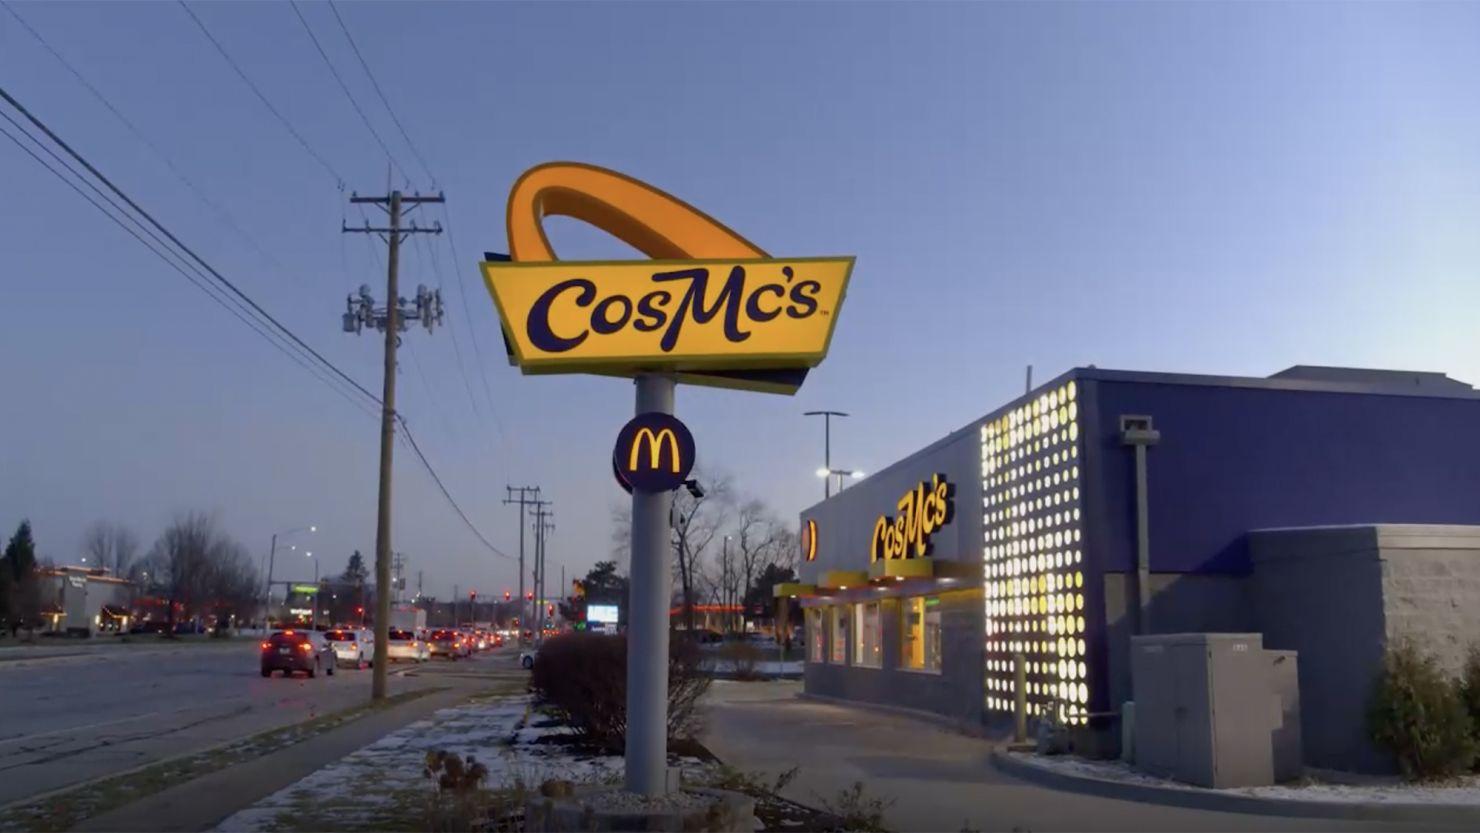 McDonald's unveils CosMc's, its answer to Starbucks | CNN Business